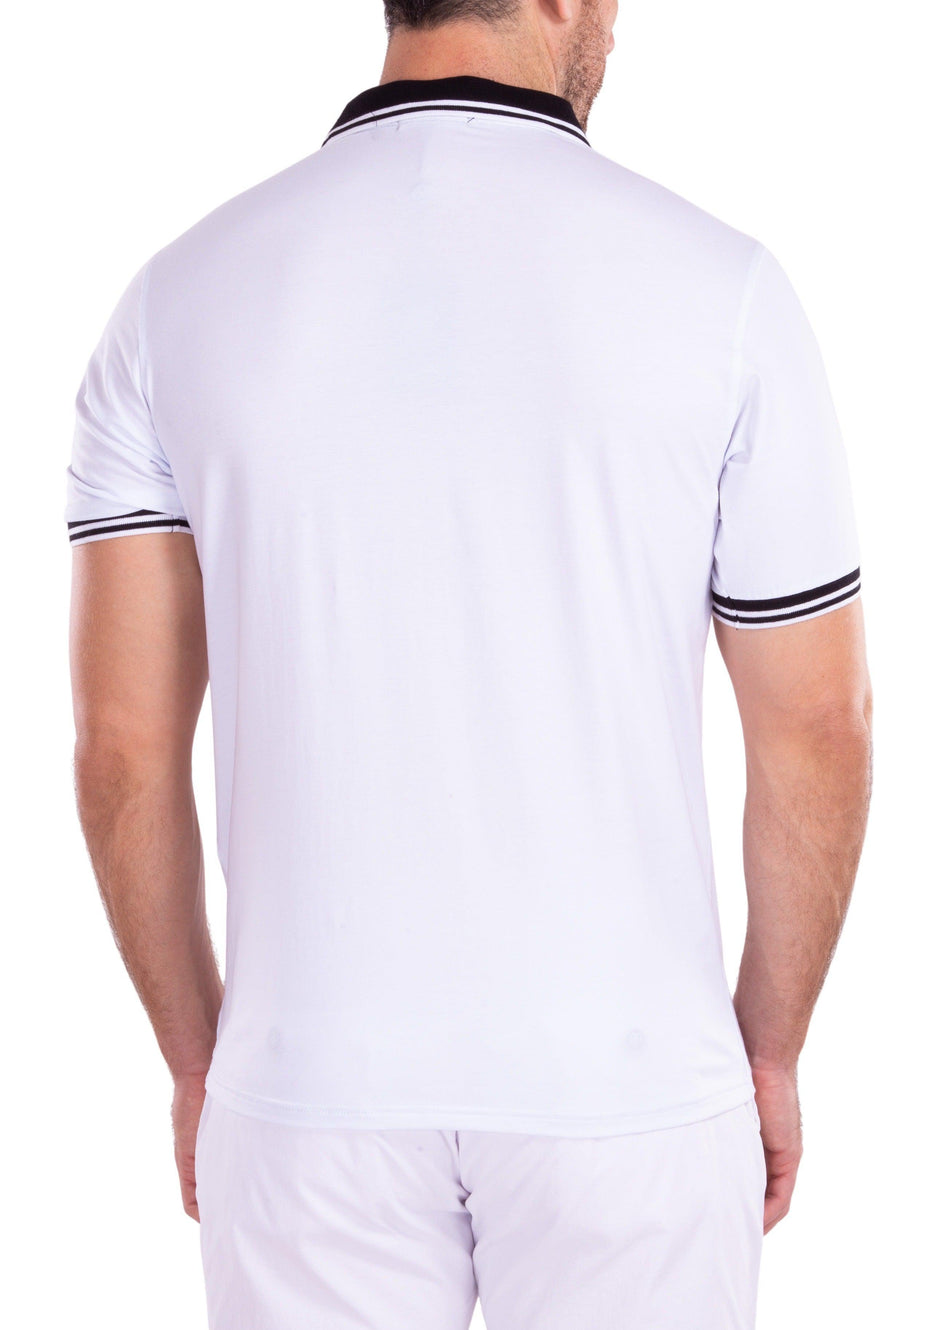 Men's Essentials Solid White Zipper Polo Shirt